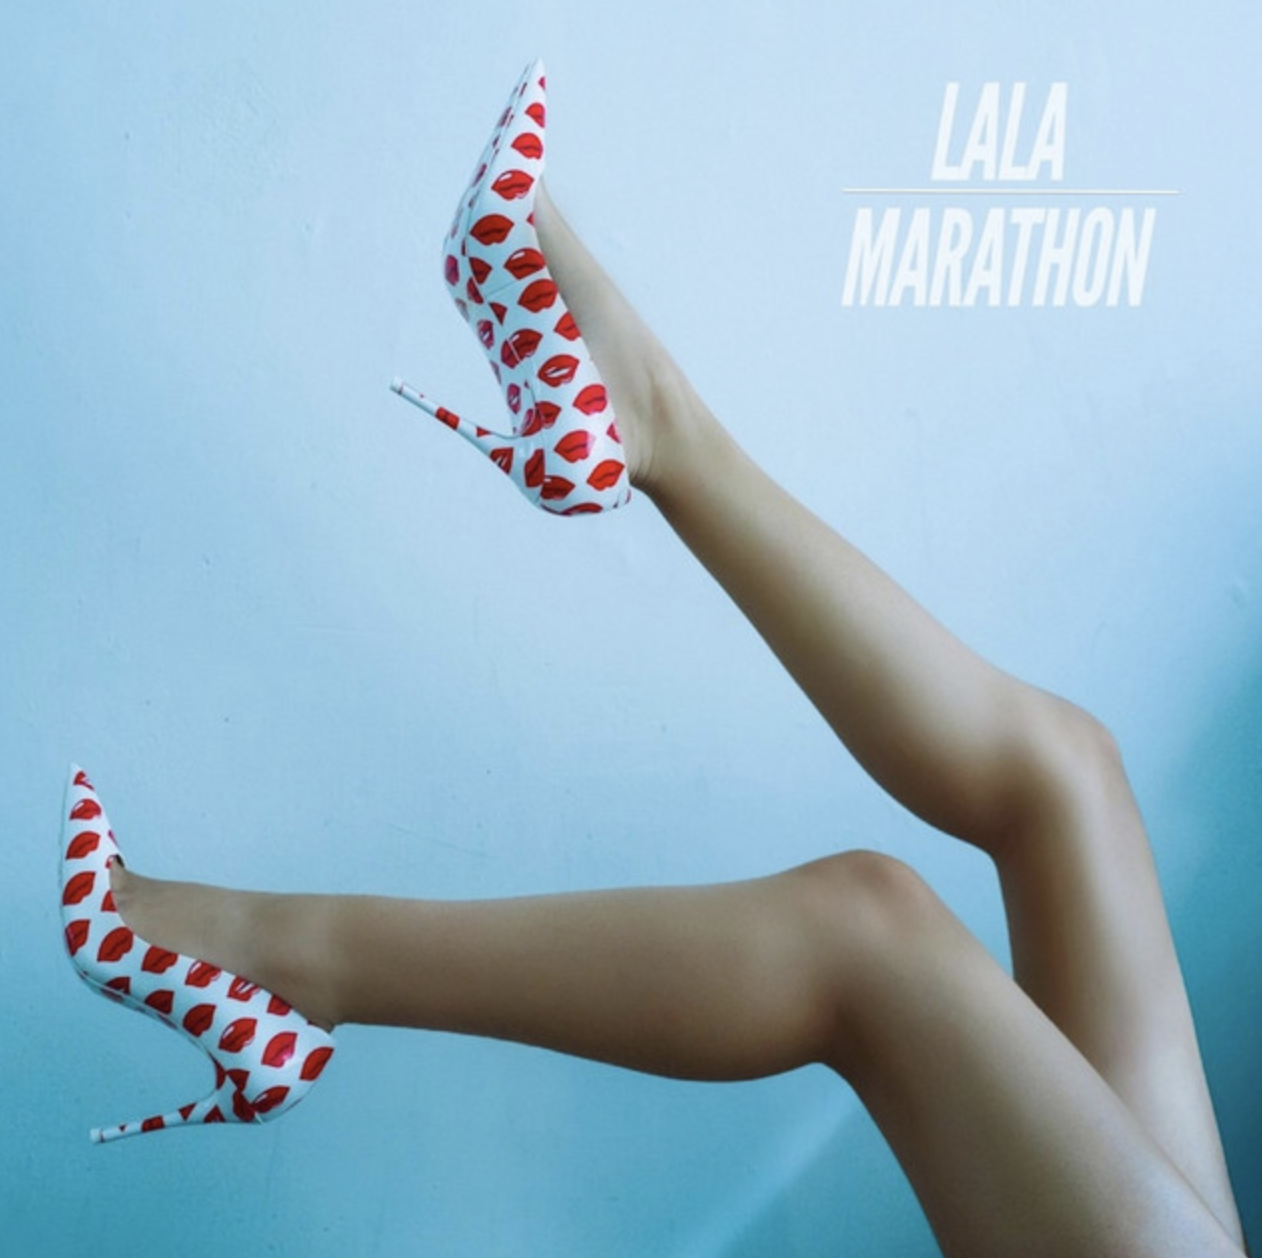 Marathon by LALA